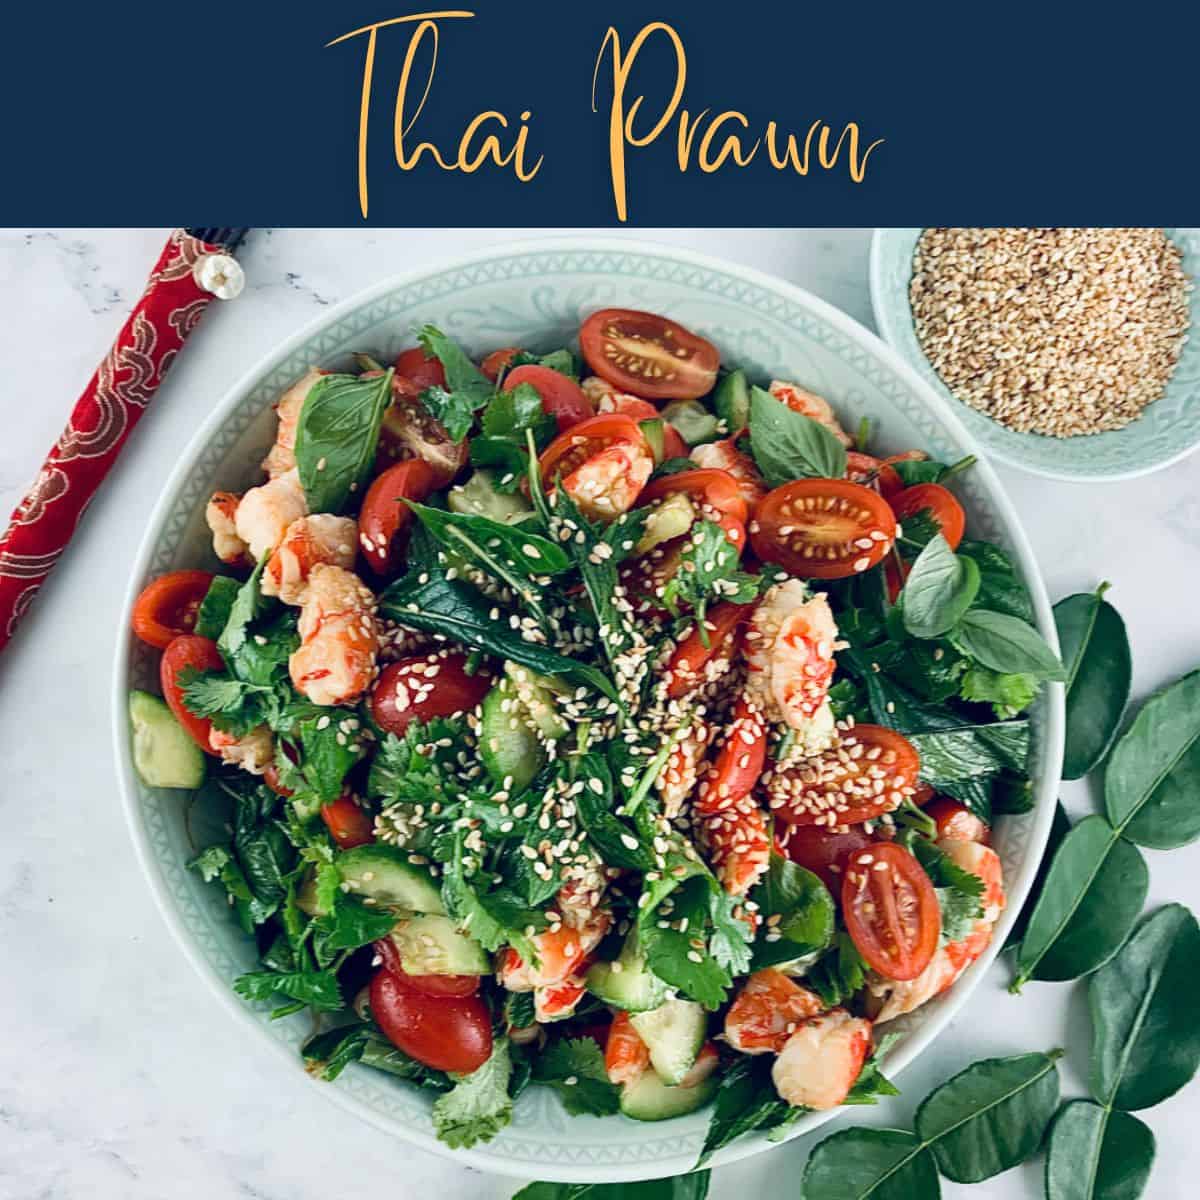 Thai prawn salad with text overlay.